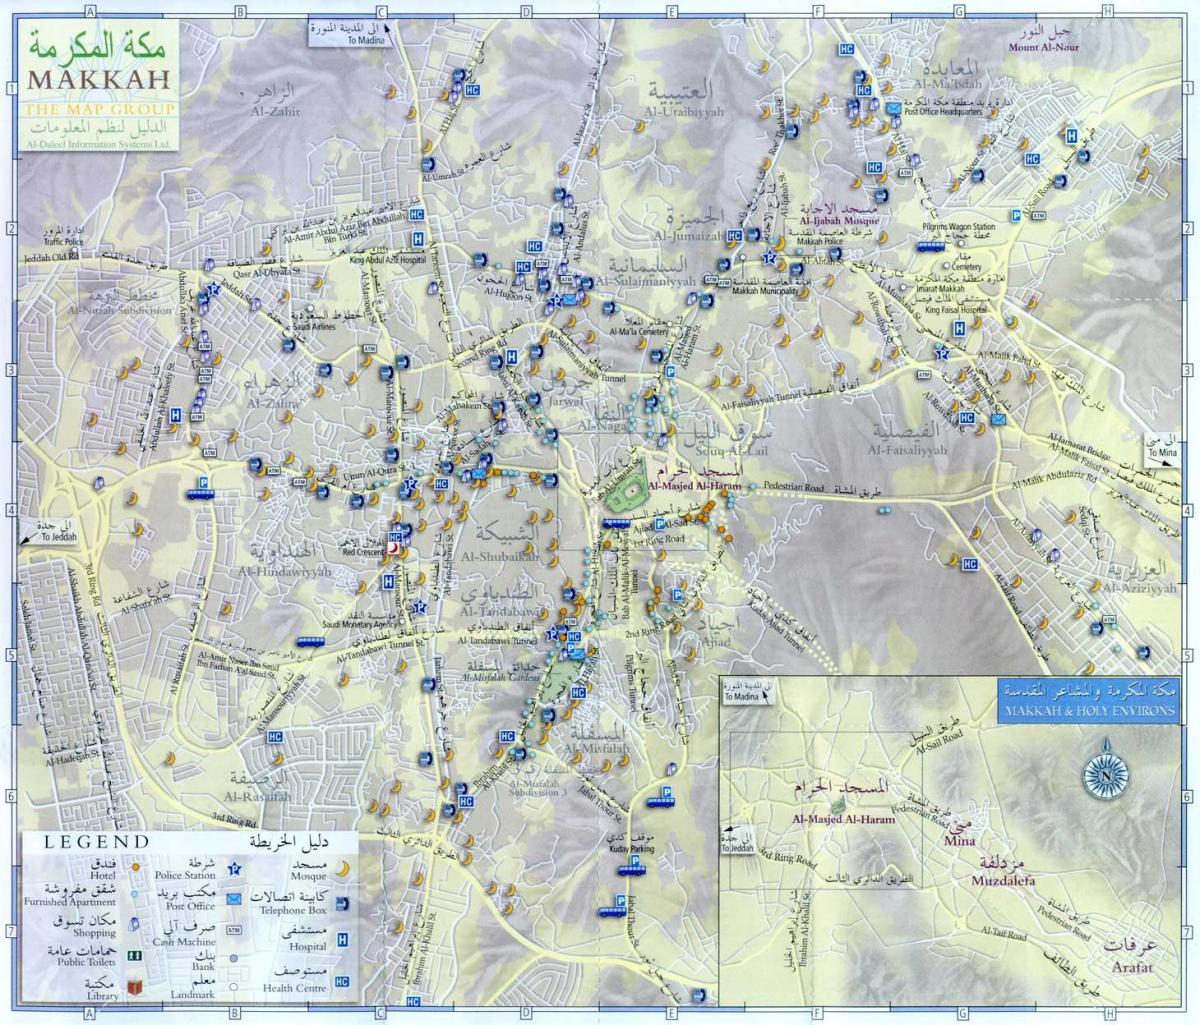  kaart van Mekka ziyarat plaatsen